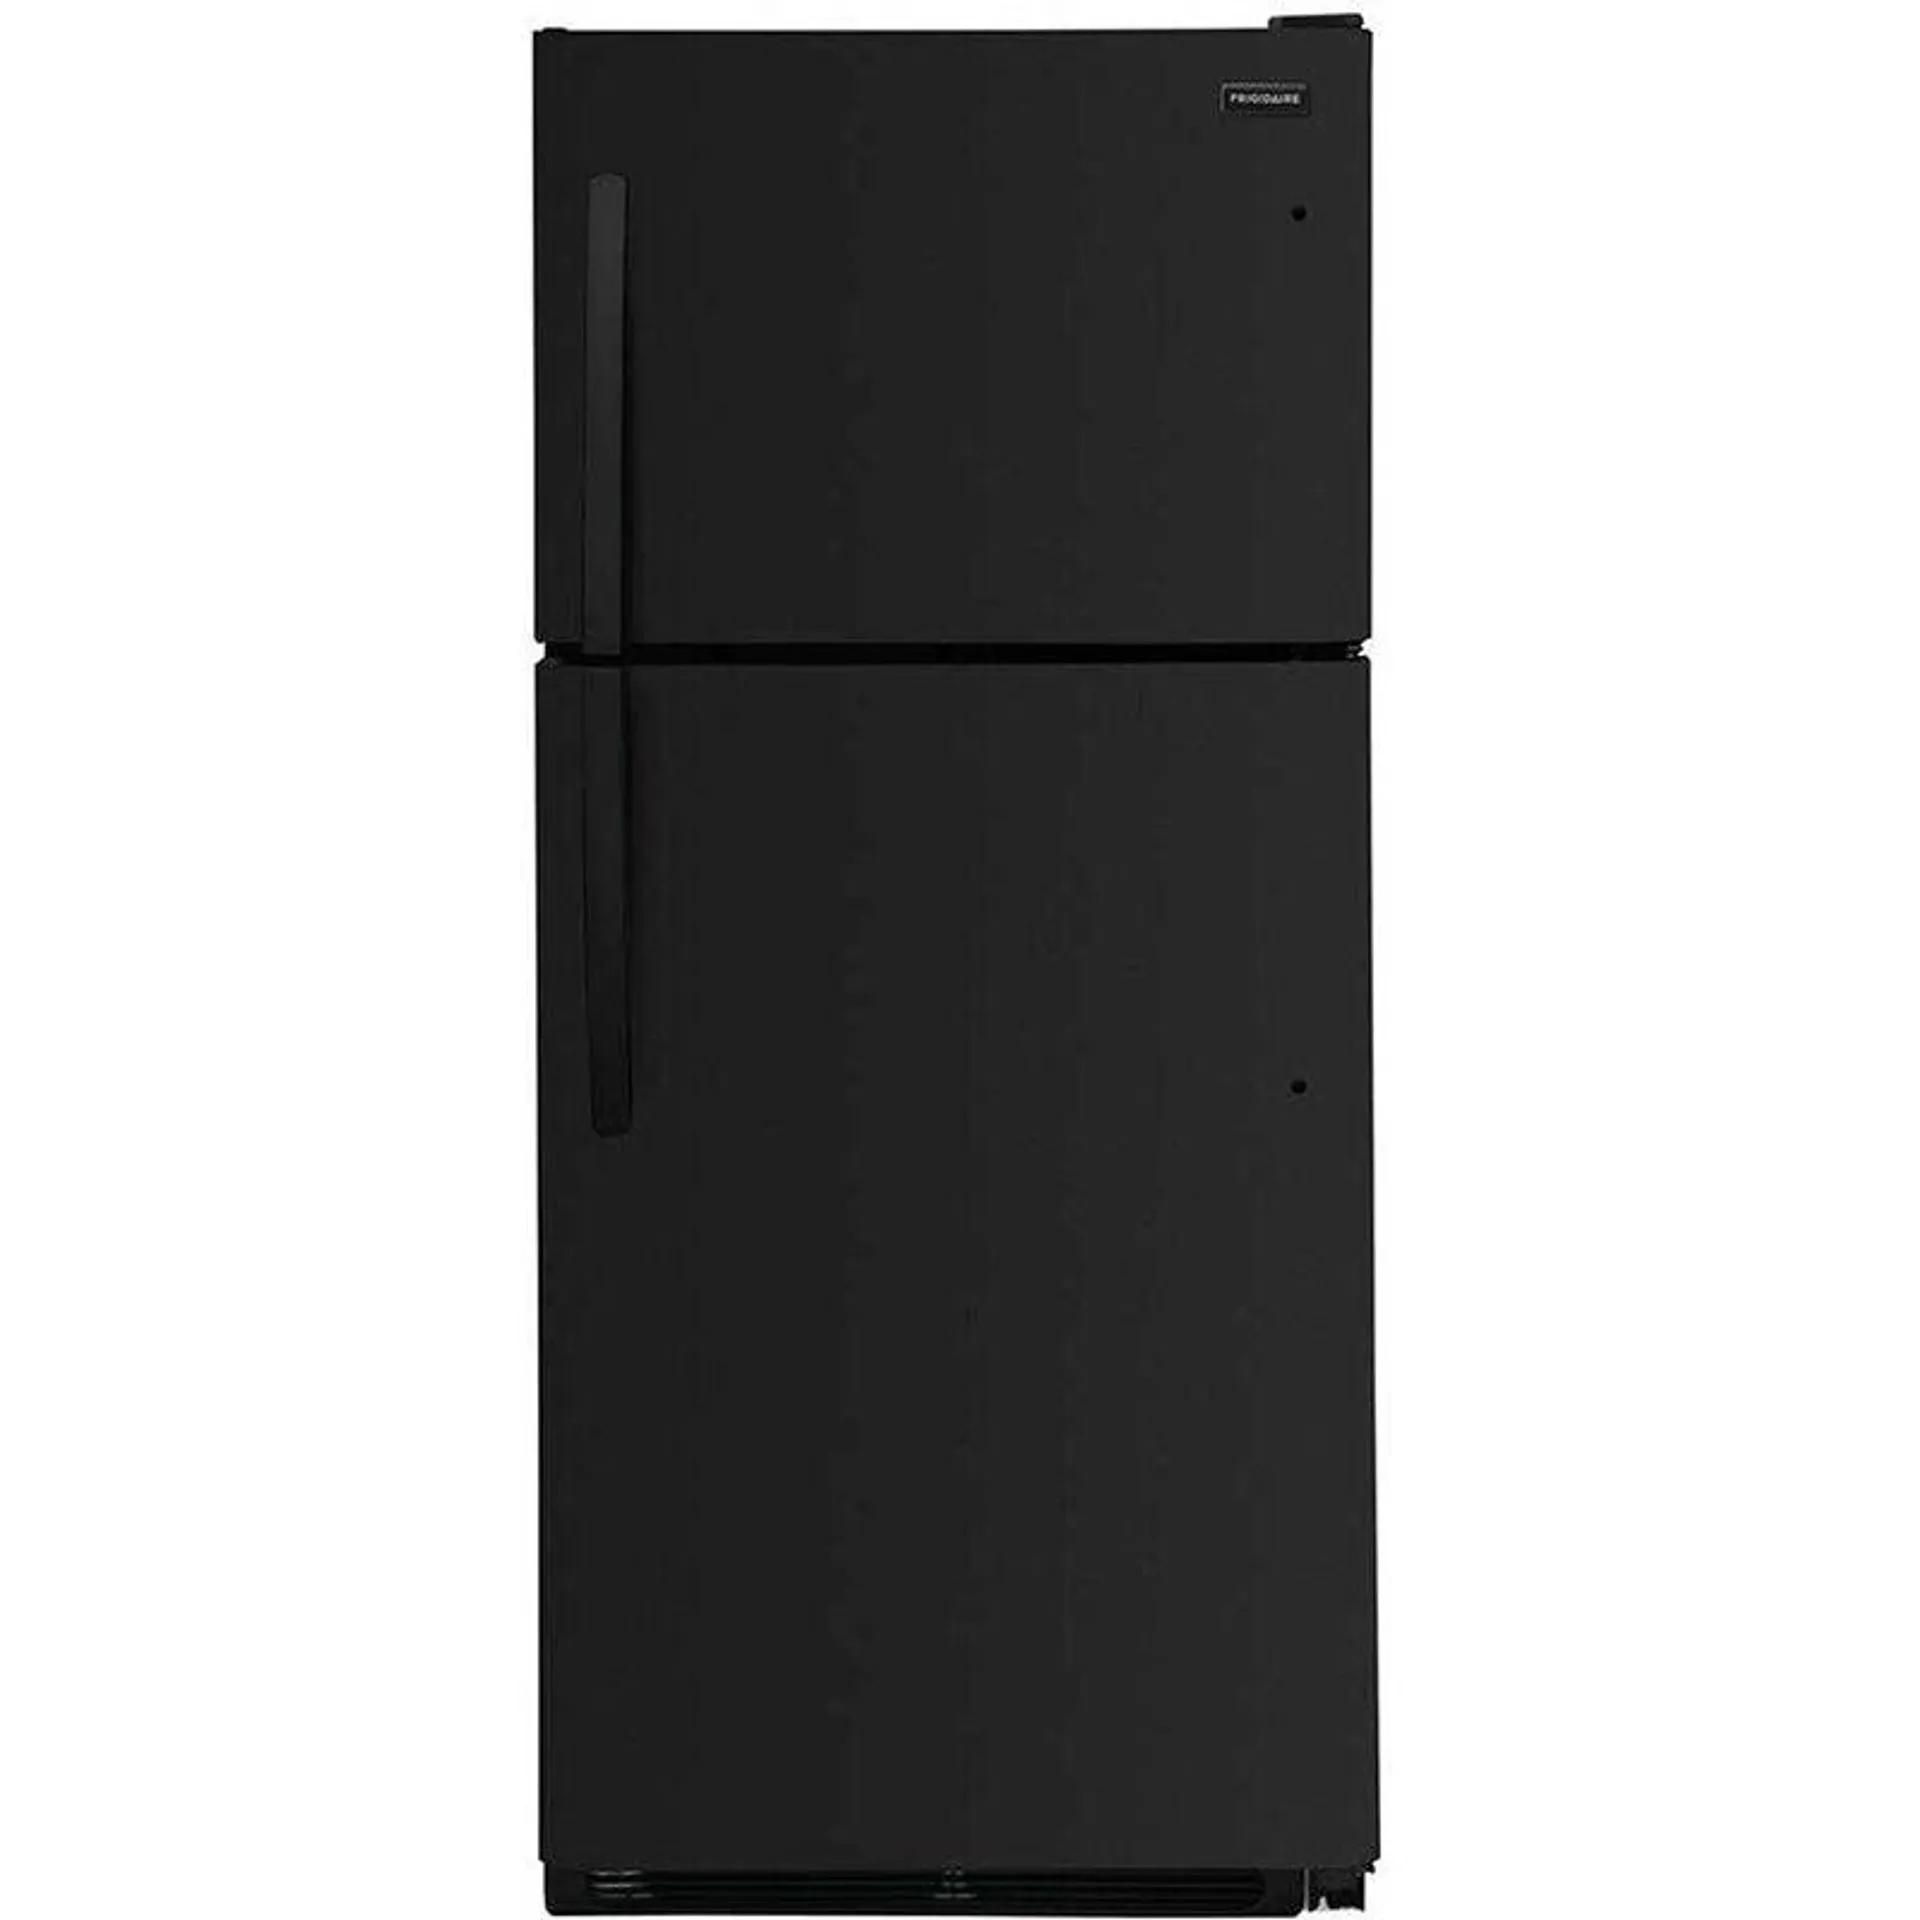 Frigidaire 30 in. 20.5 cu. ft. Top Freezer Refrigerator - Black